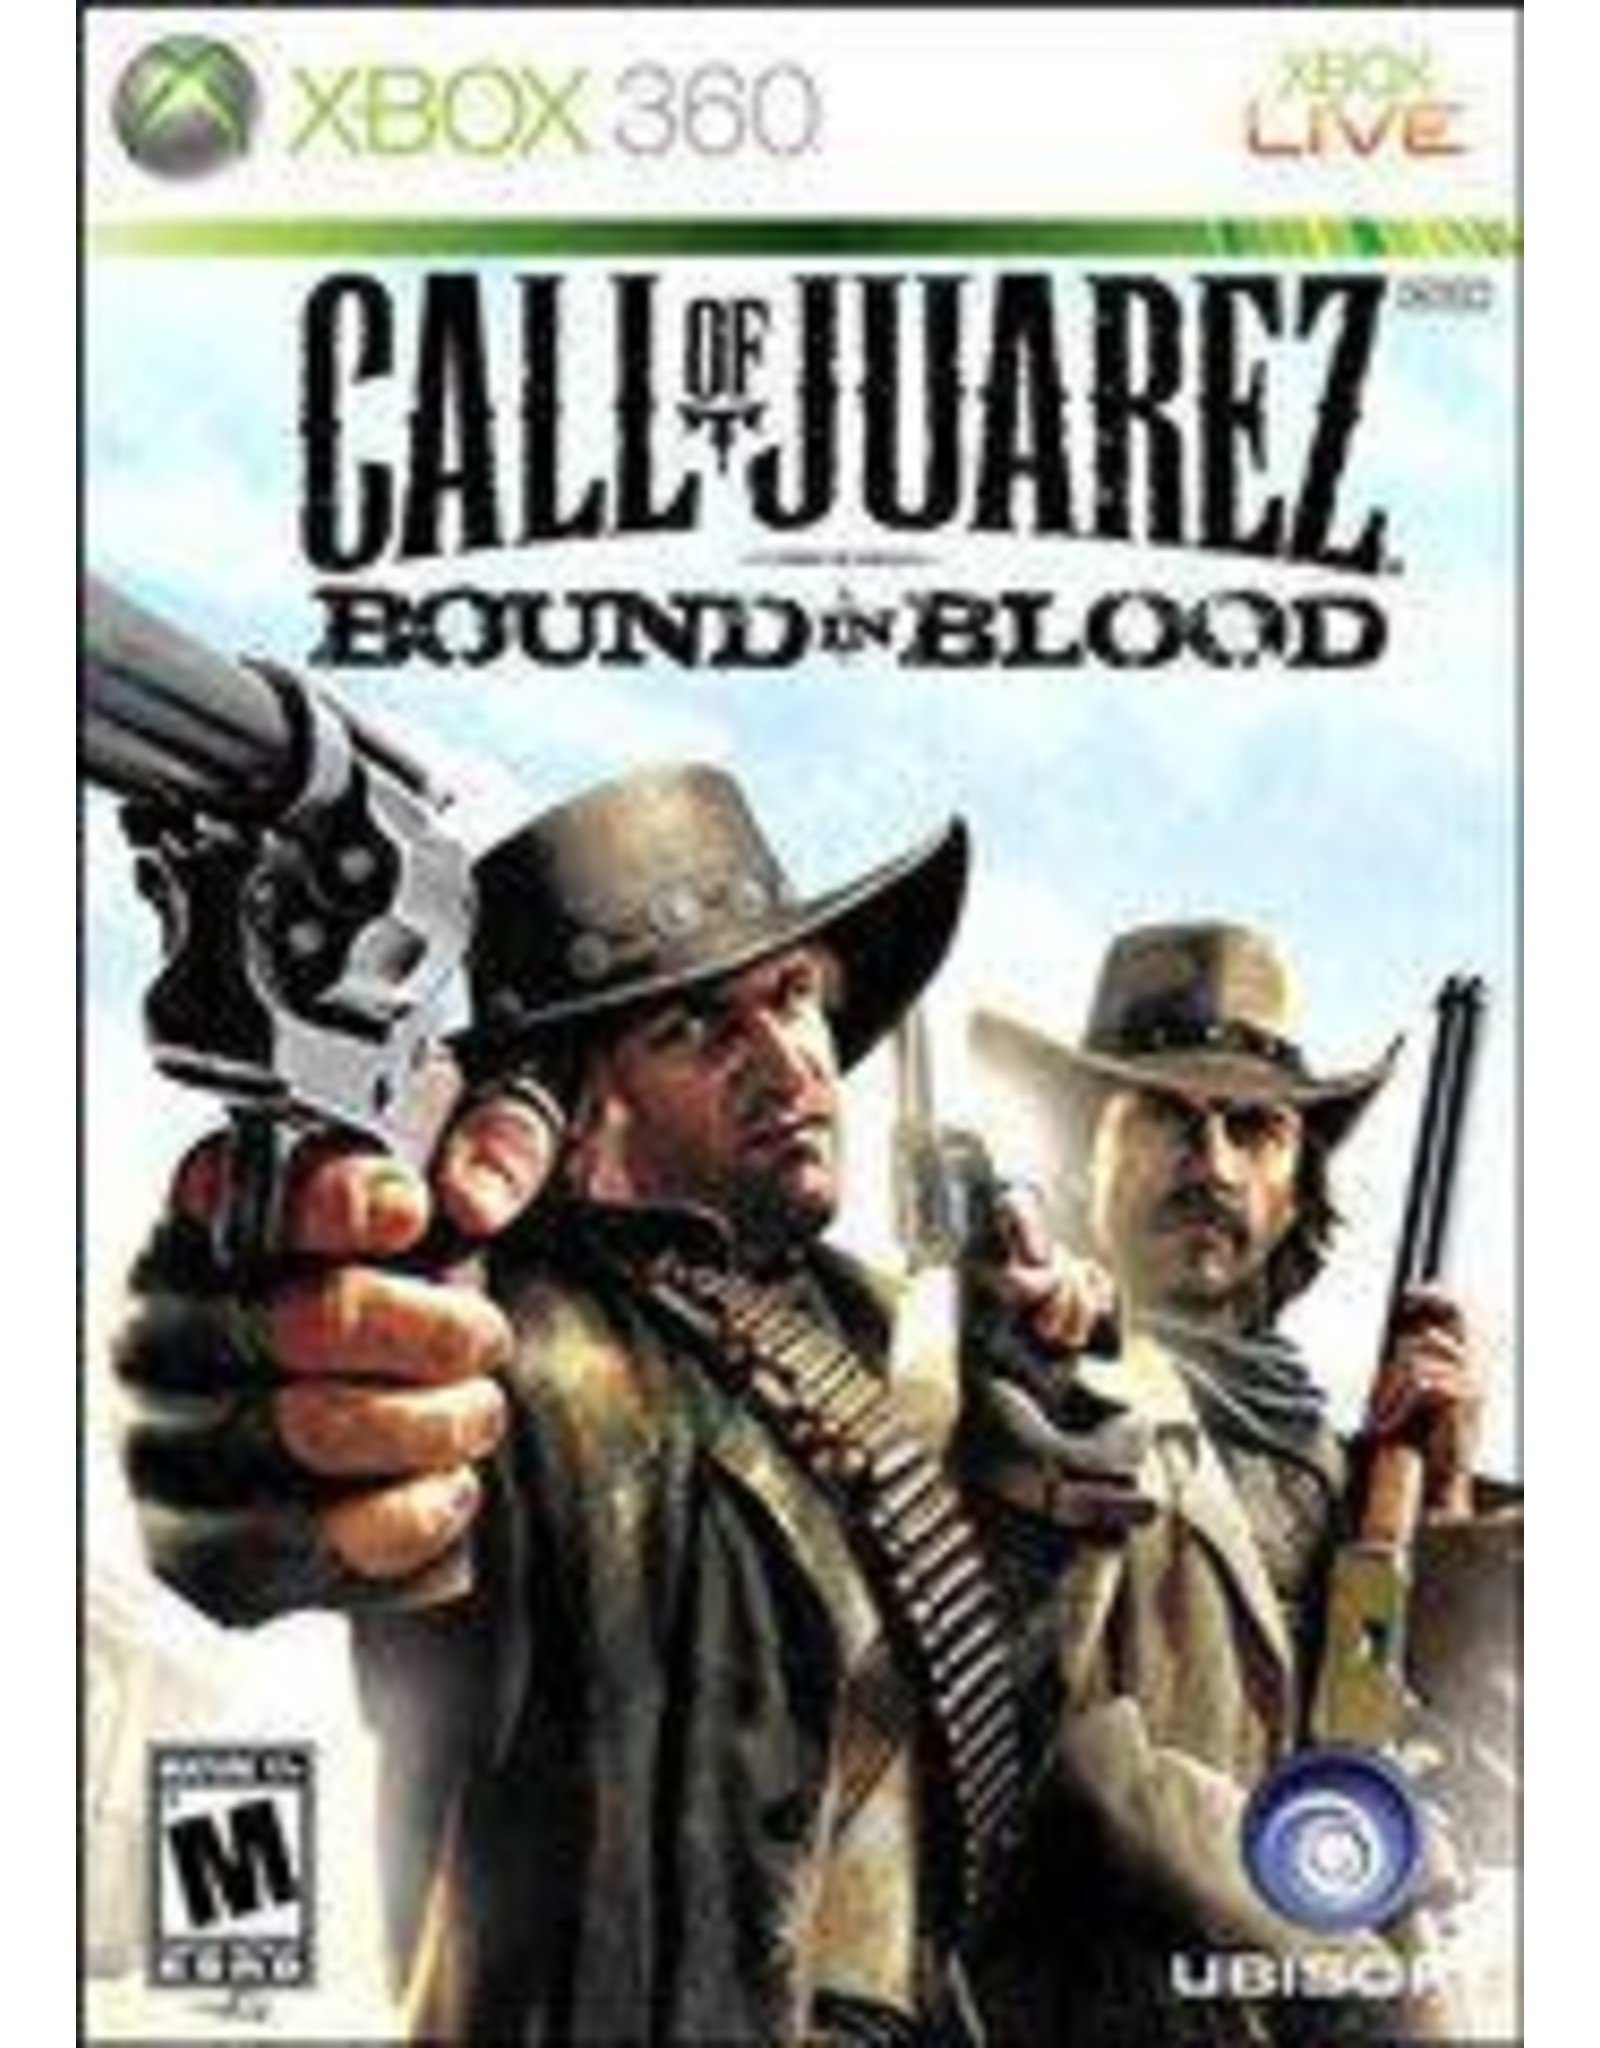 Xbox 360 Call of Juarez: Bound in Blood (CiB)